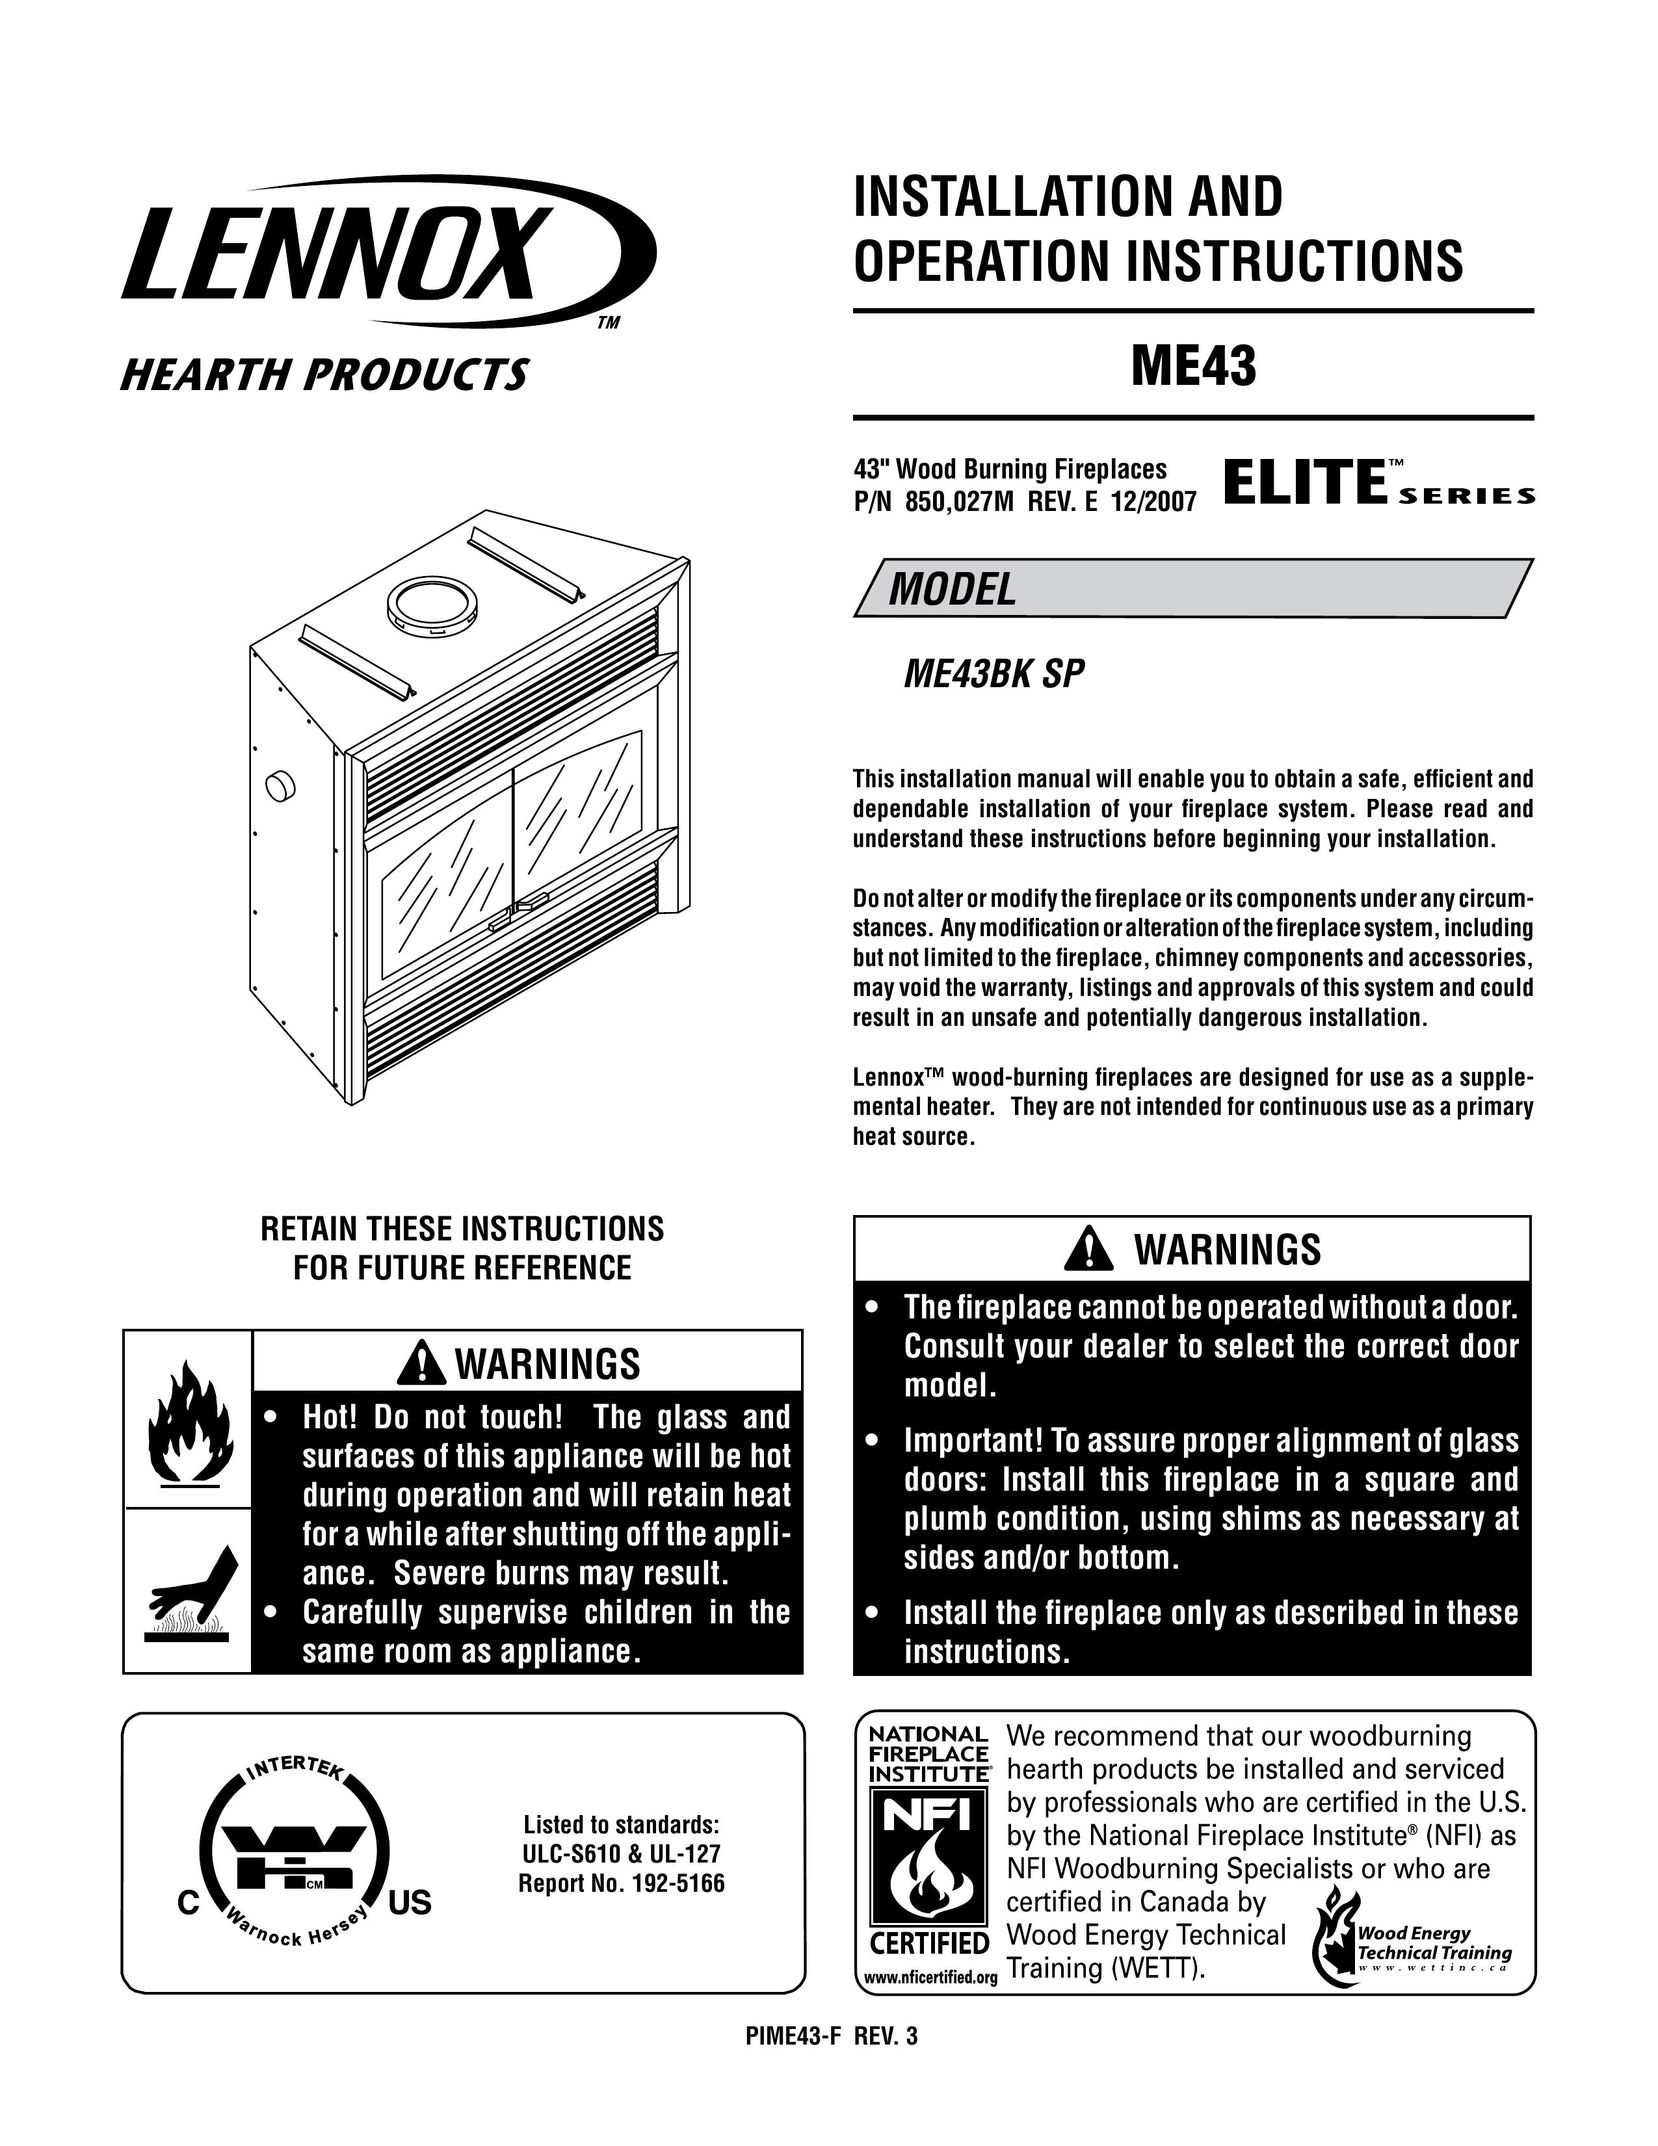 LG Electronics ME43BK SP Indoor Fireplace User Manual